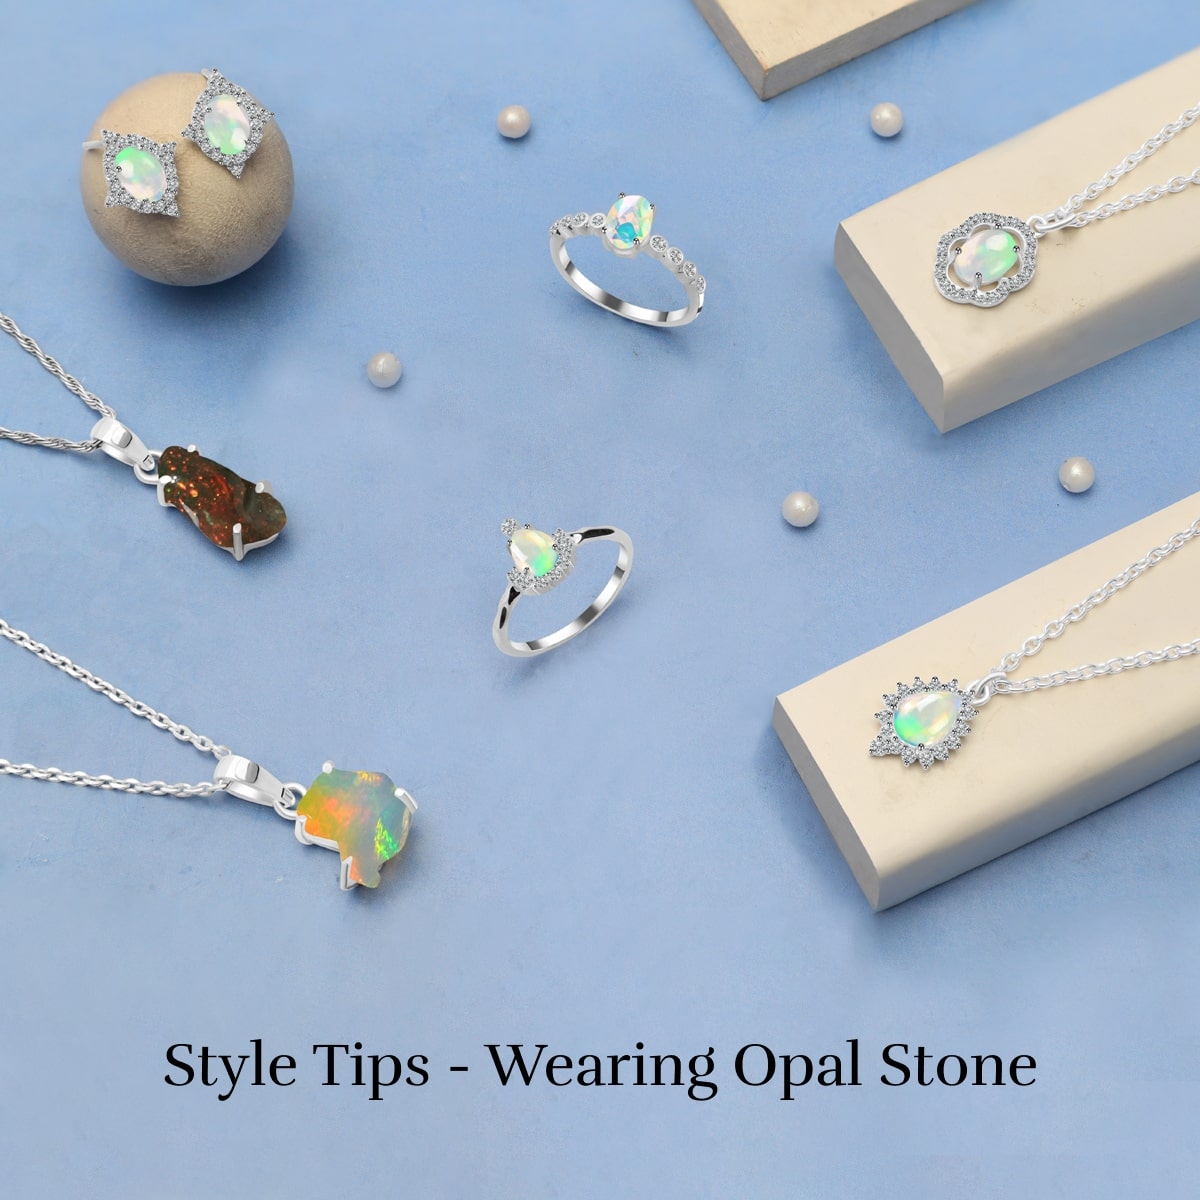 How To Wear Opal Stone